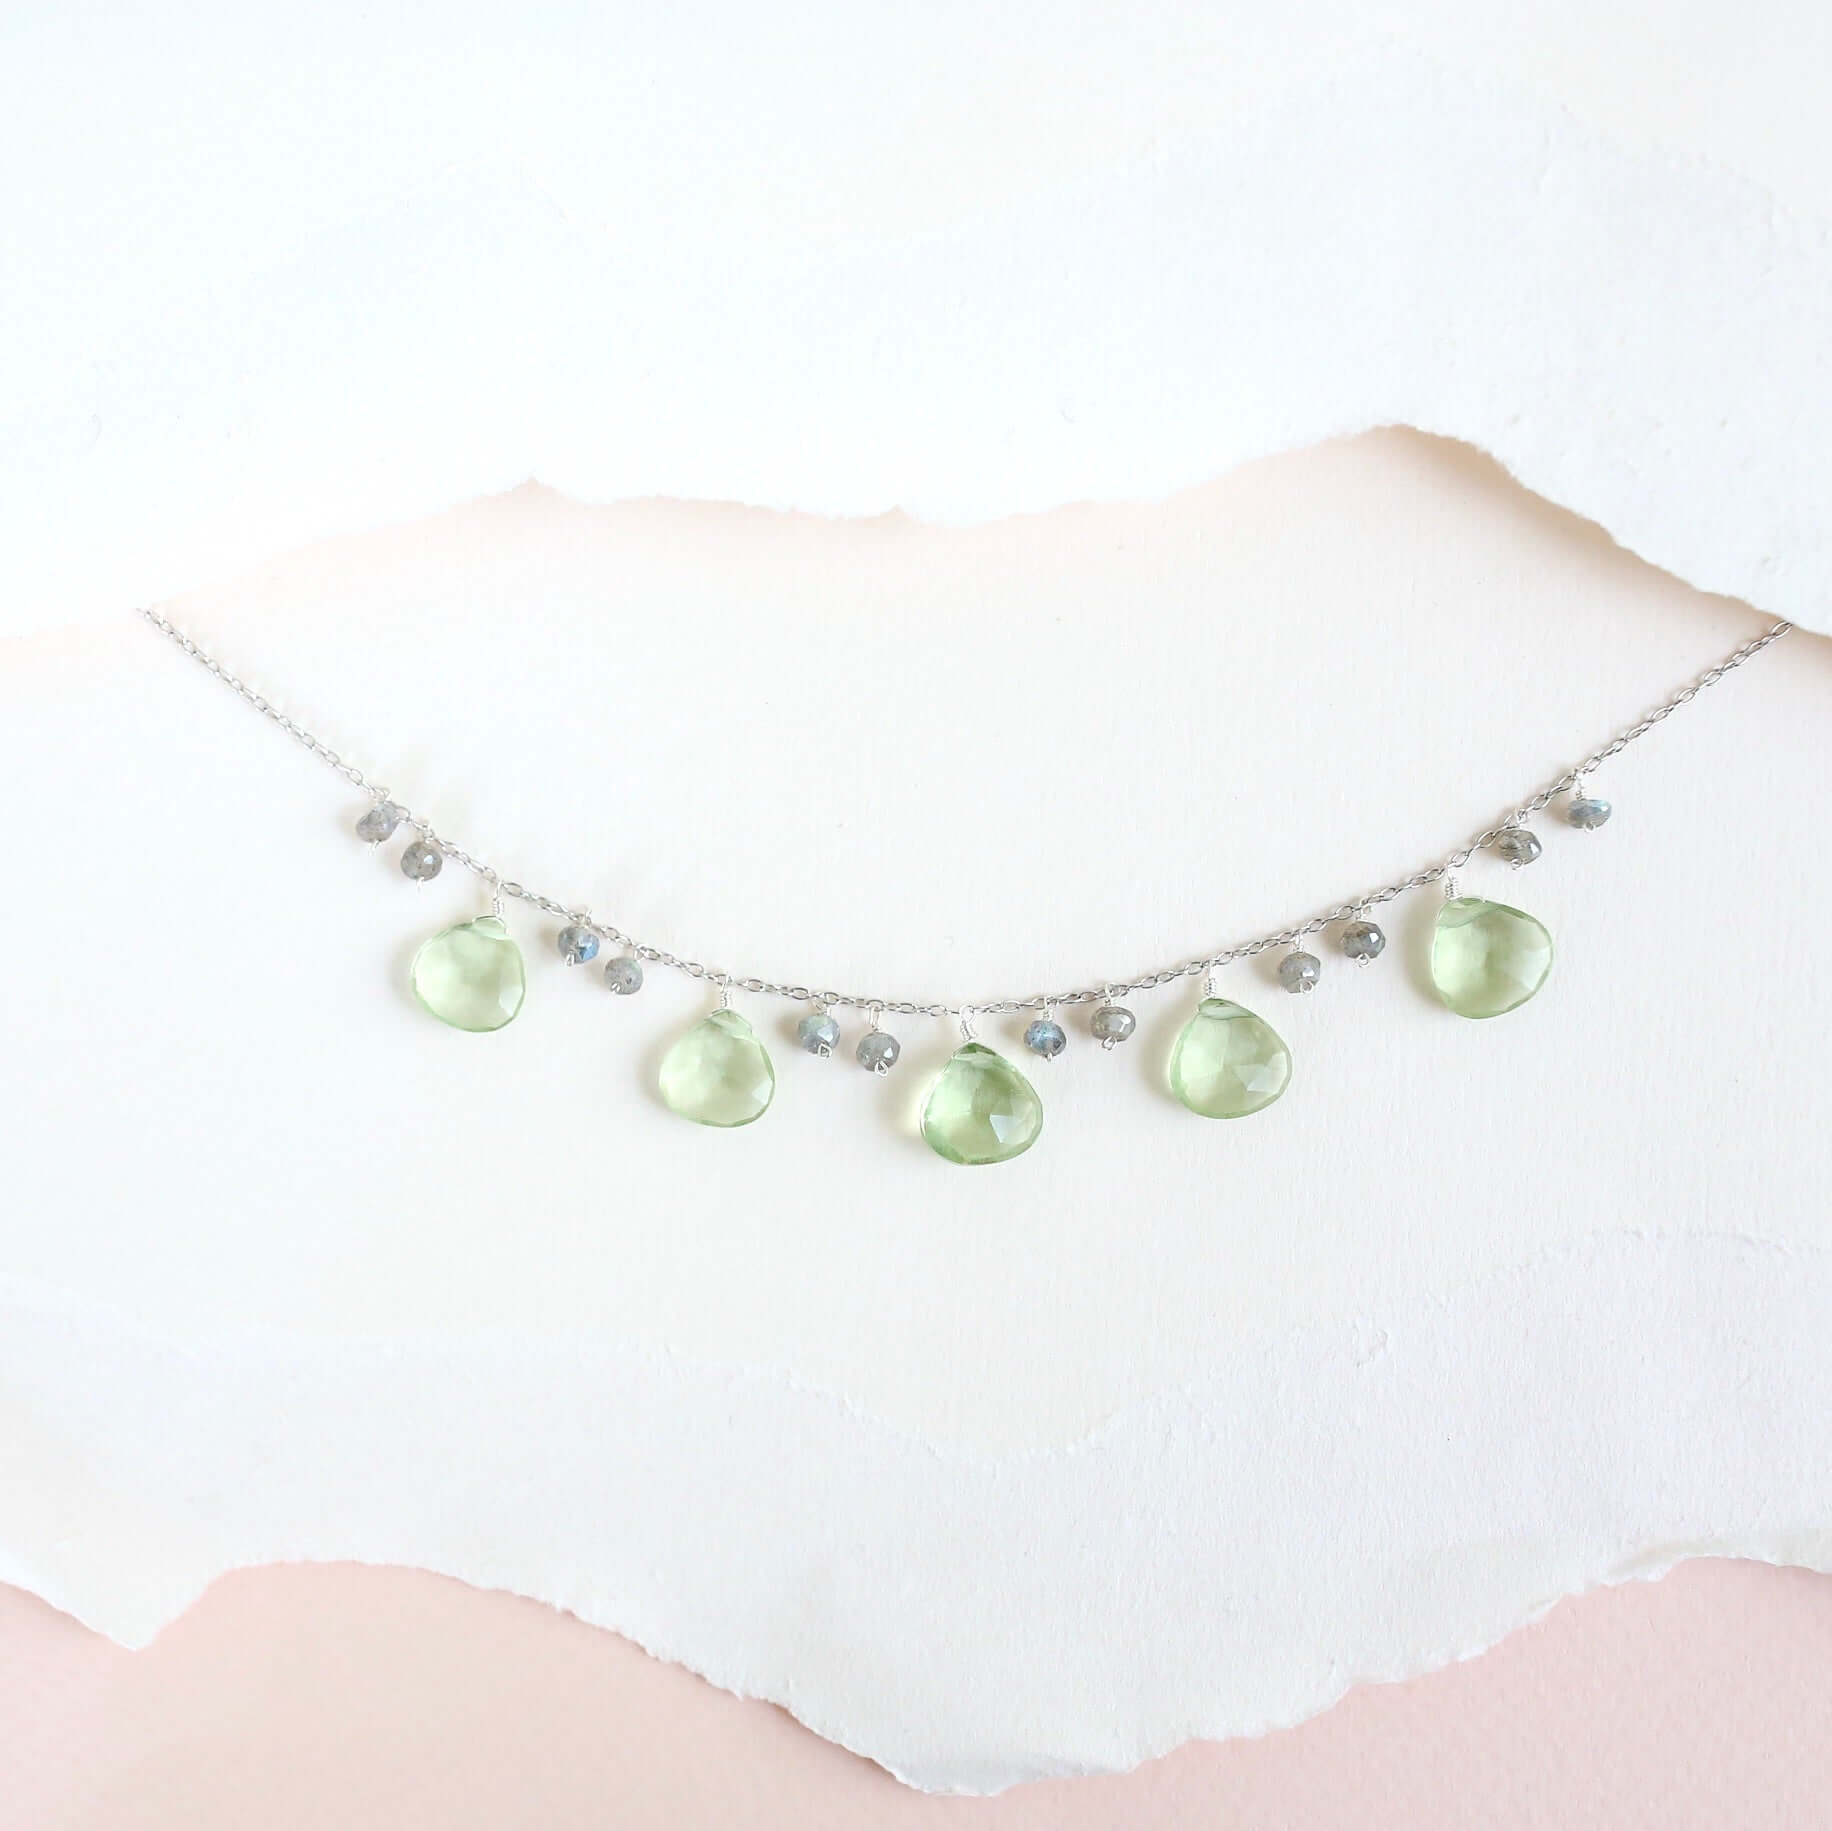 Sparkling Green Amethyst & Labradorite Gems on a Rhodium-Plated Necklace